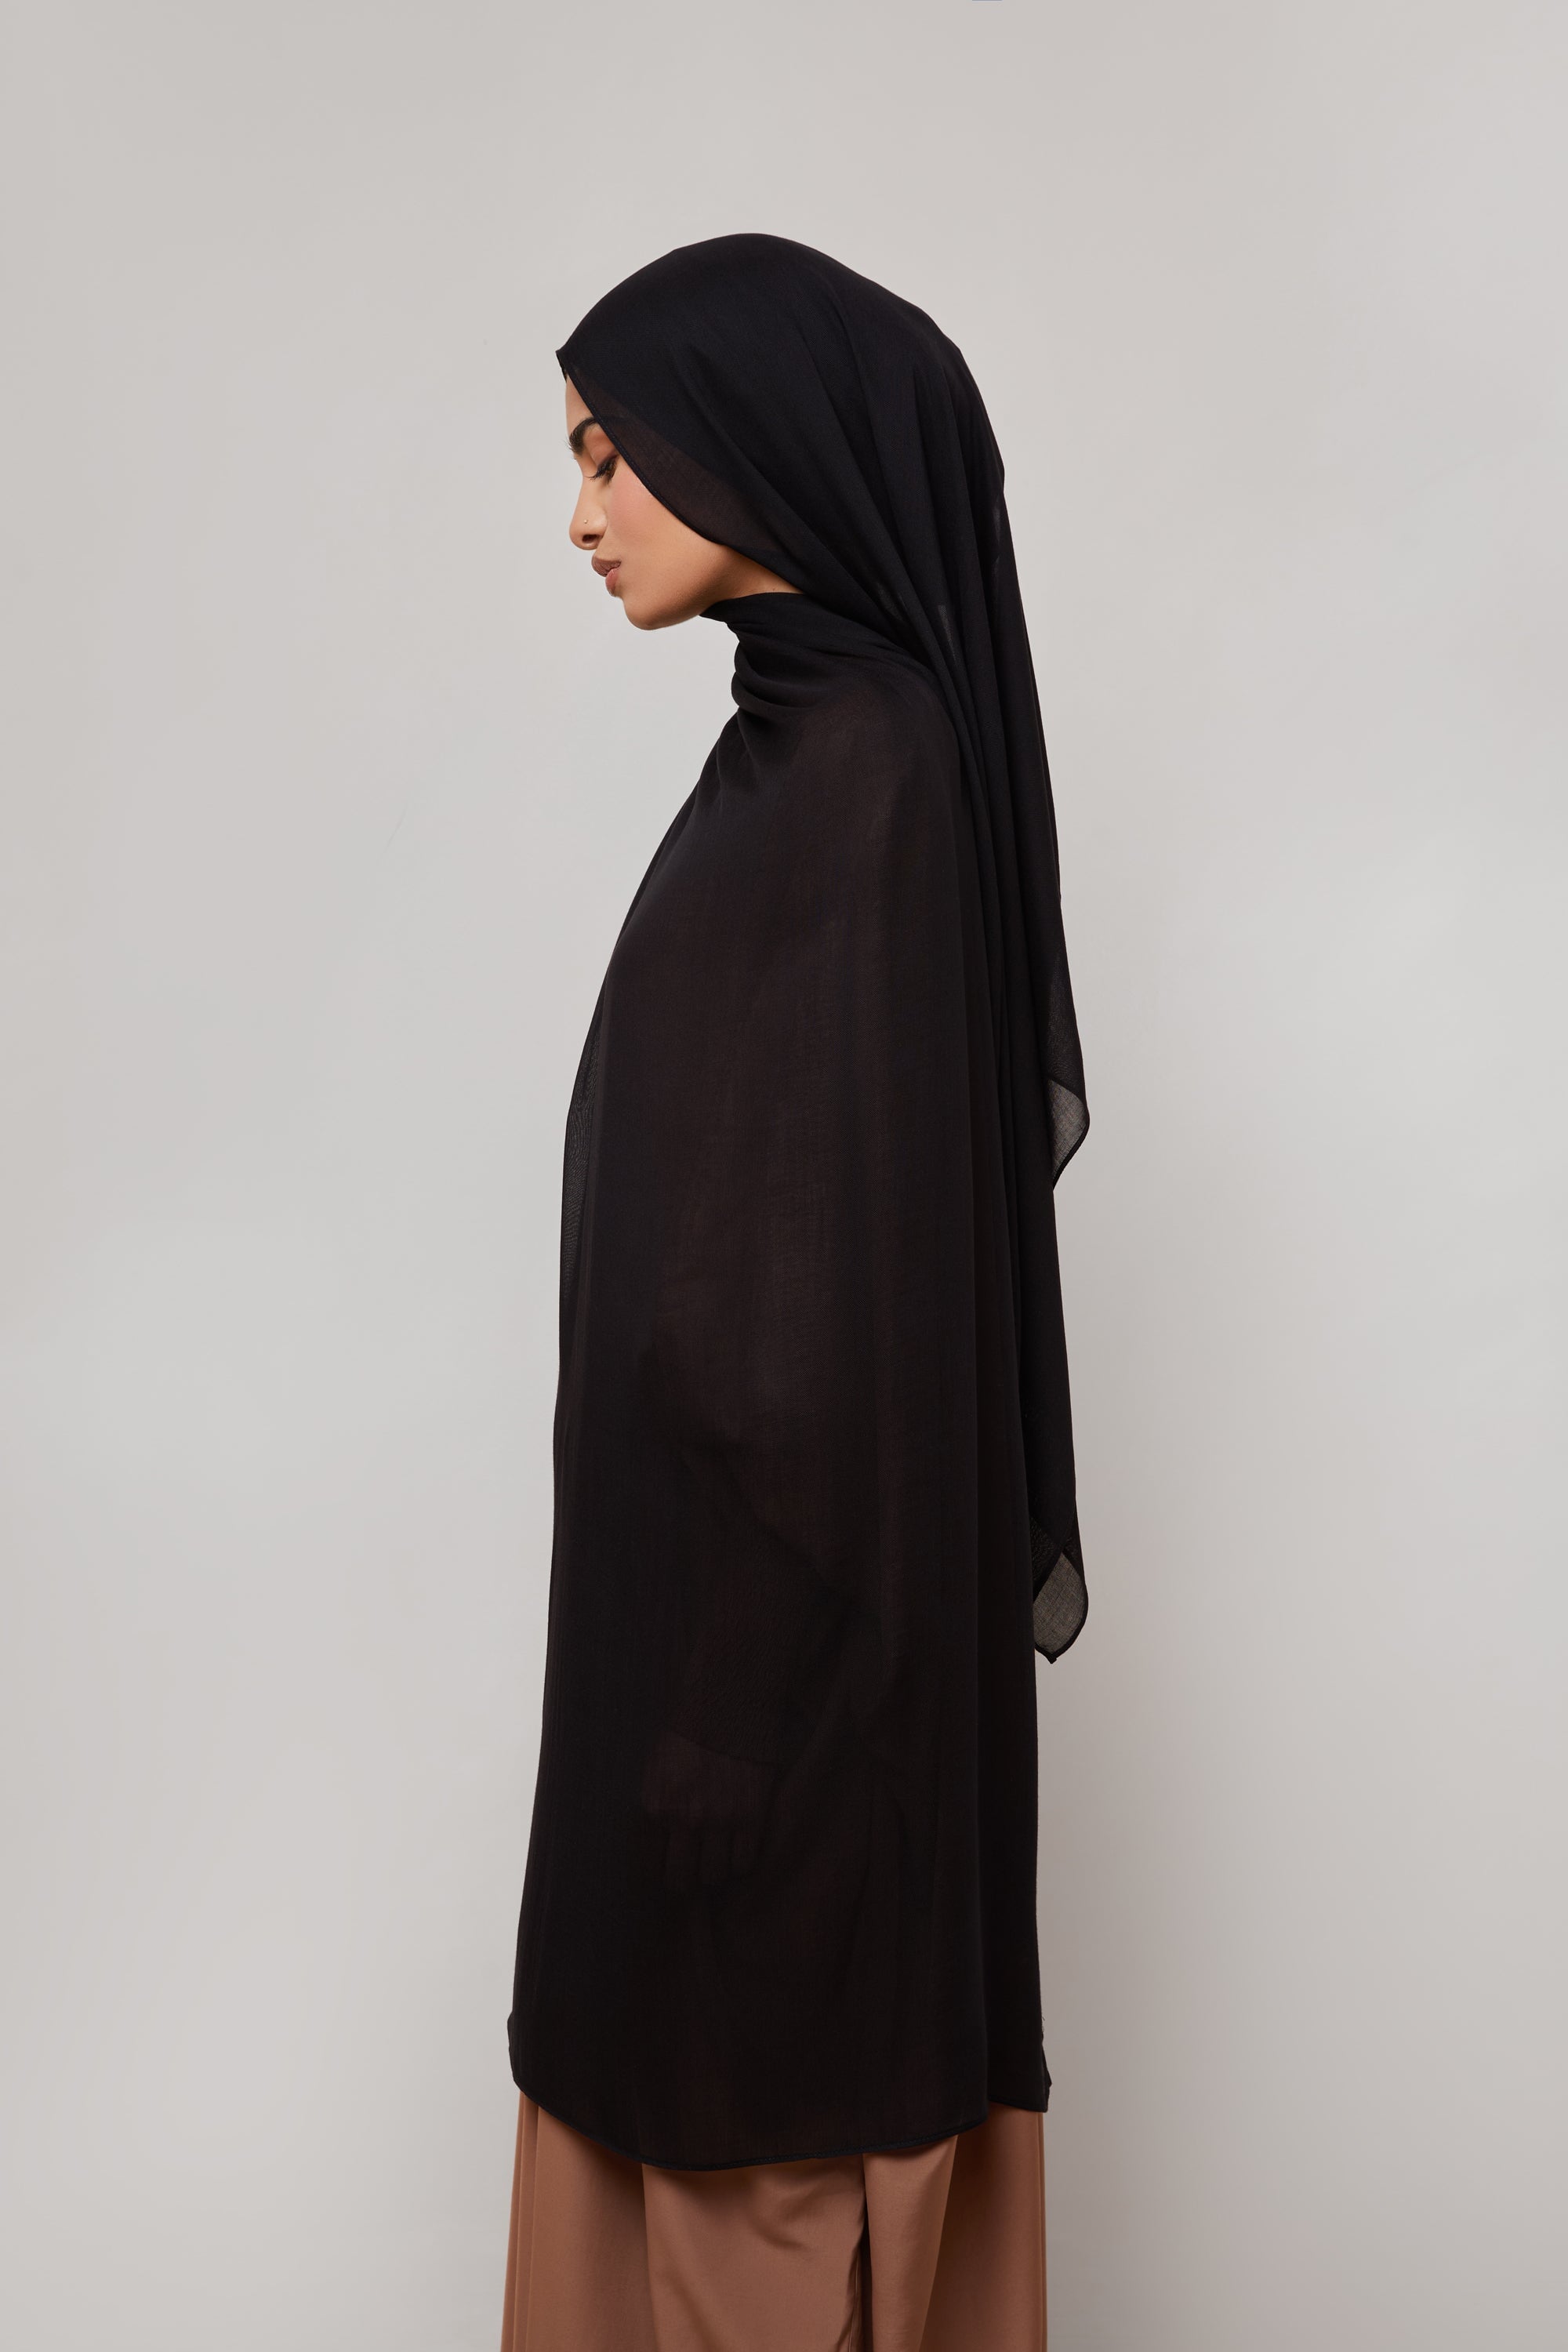 Bamboo Woven Hijab - Black Veiled 